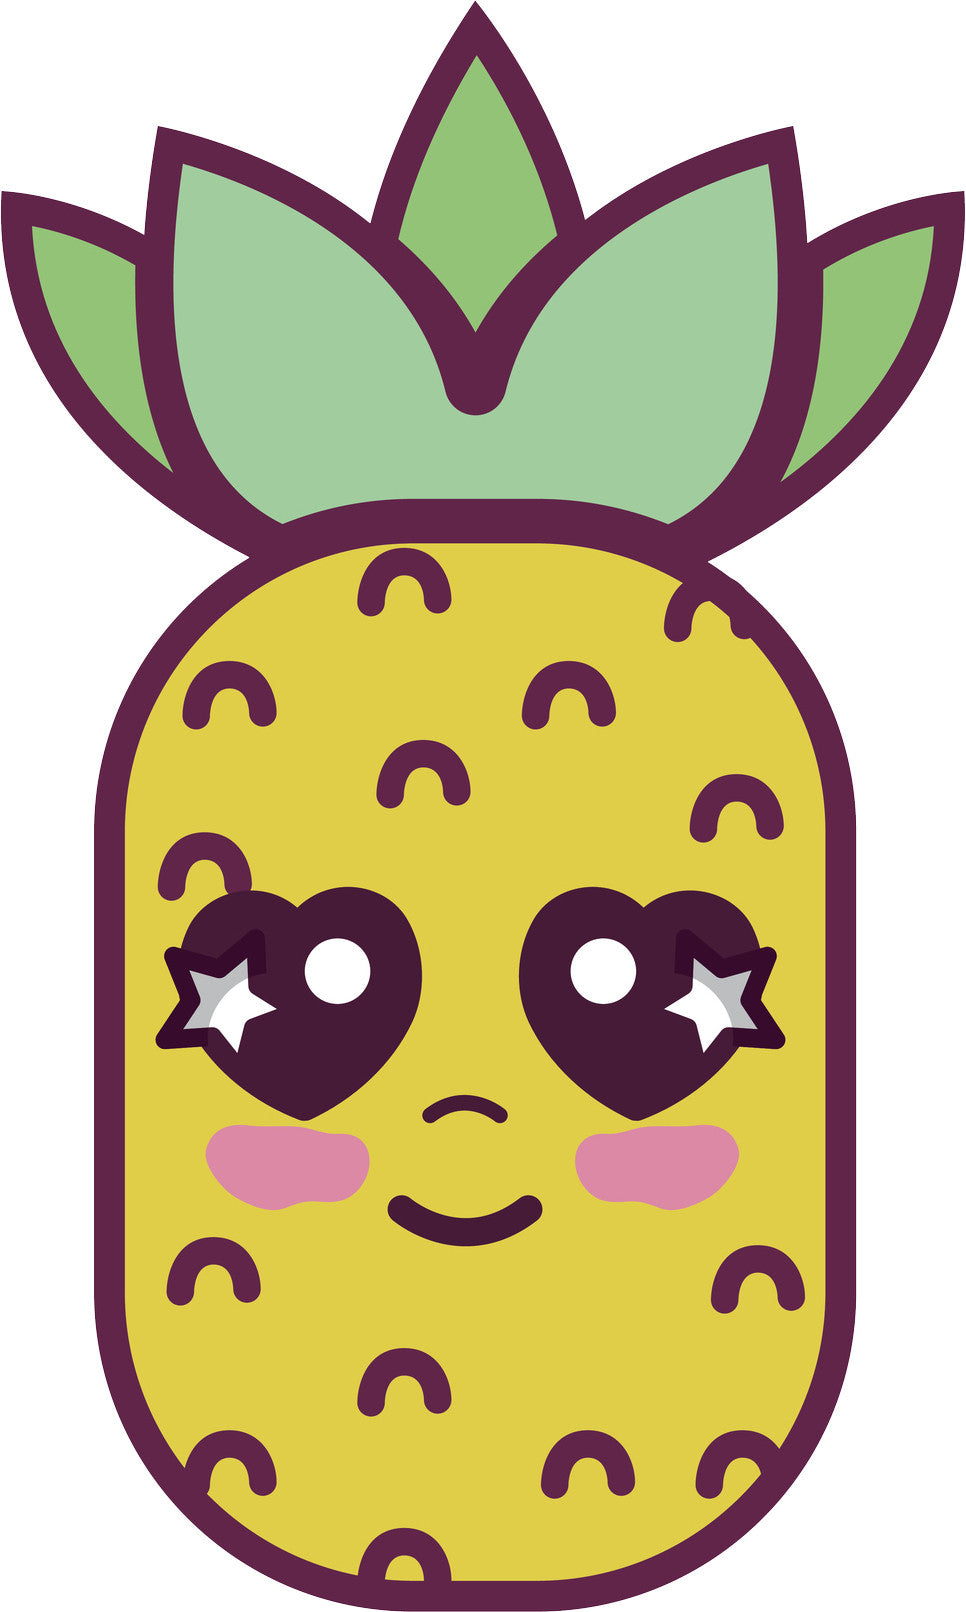 Adorable Girly Kawaii Pineapple Cartoon Emoji #2 Vinyl Decal Sticker